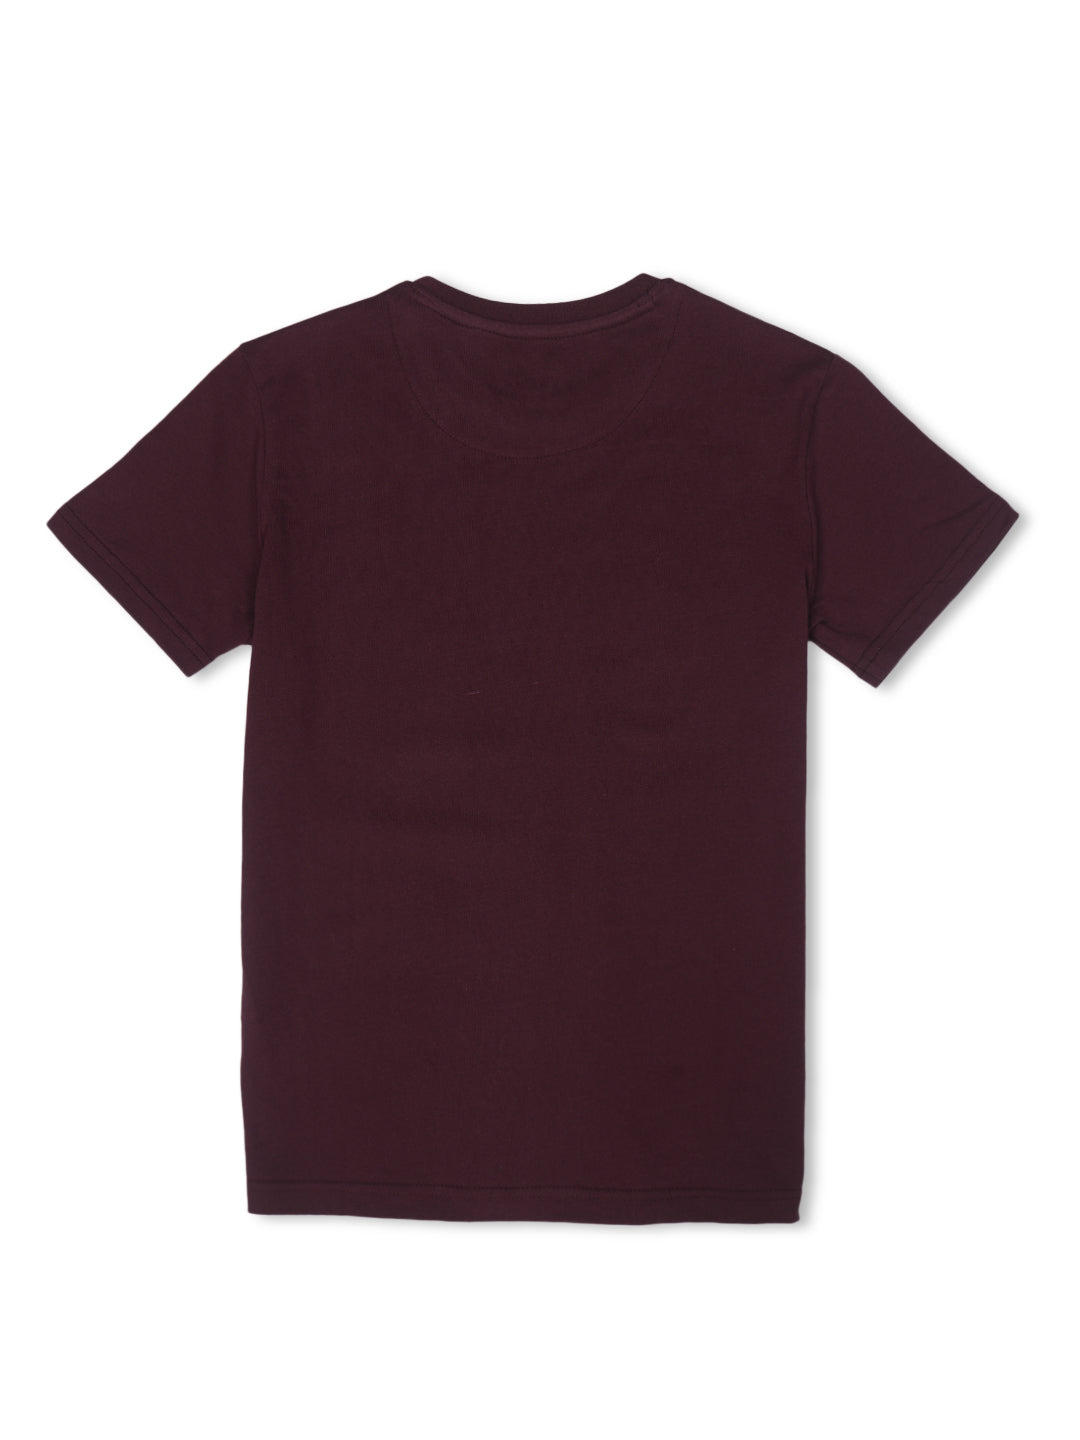 Boys Maroon Cotton Printed Half Sleeves T-Shirt